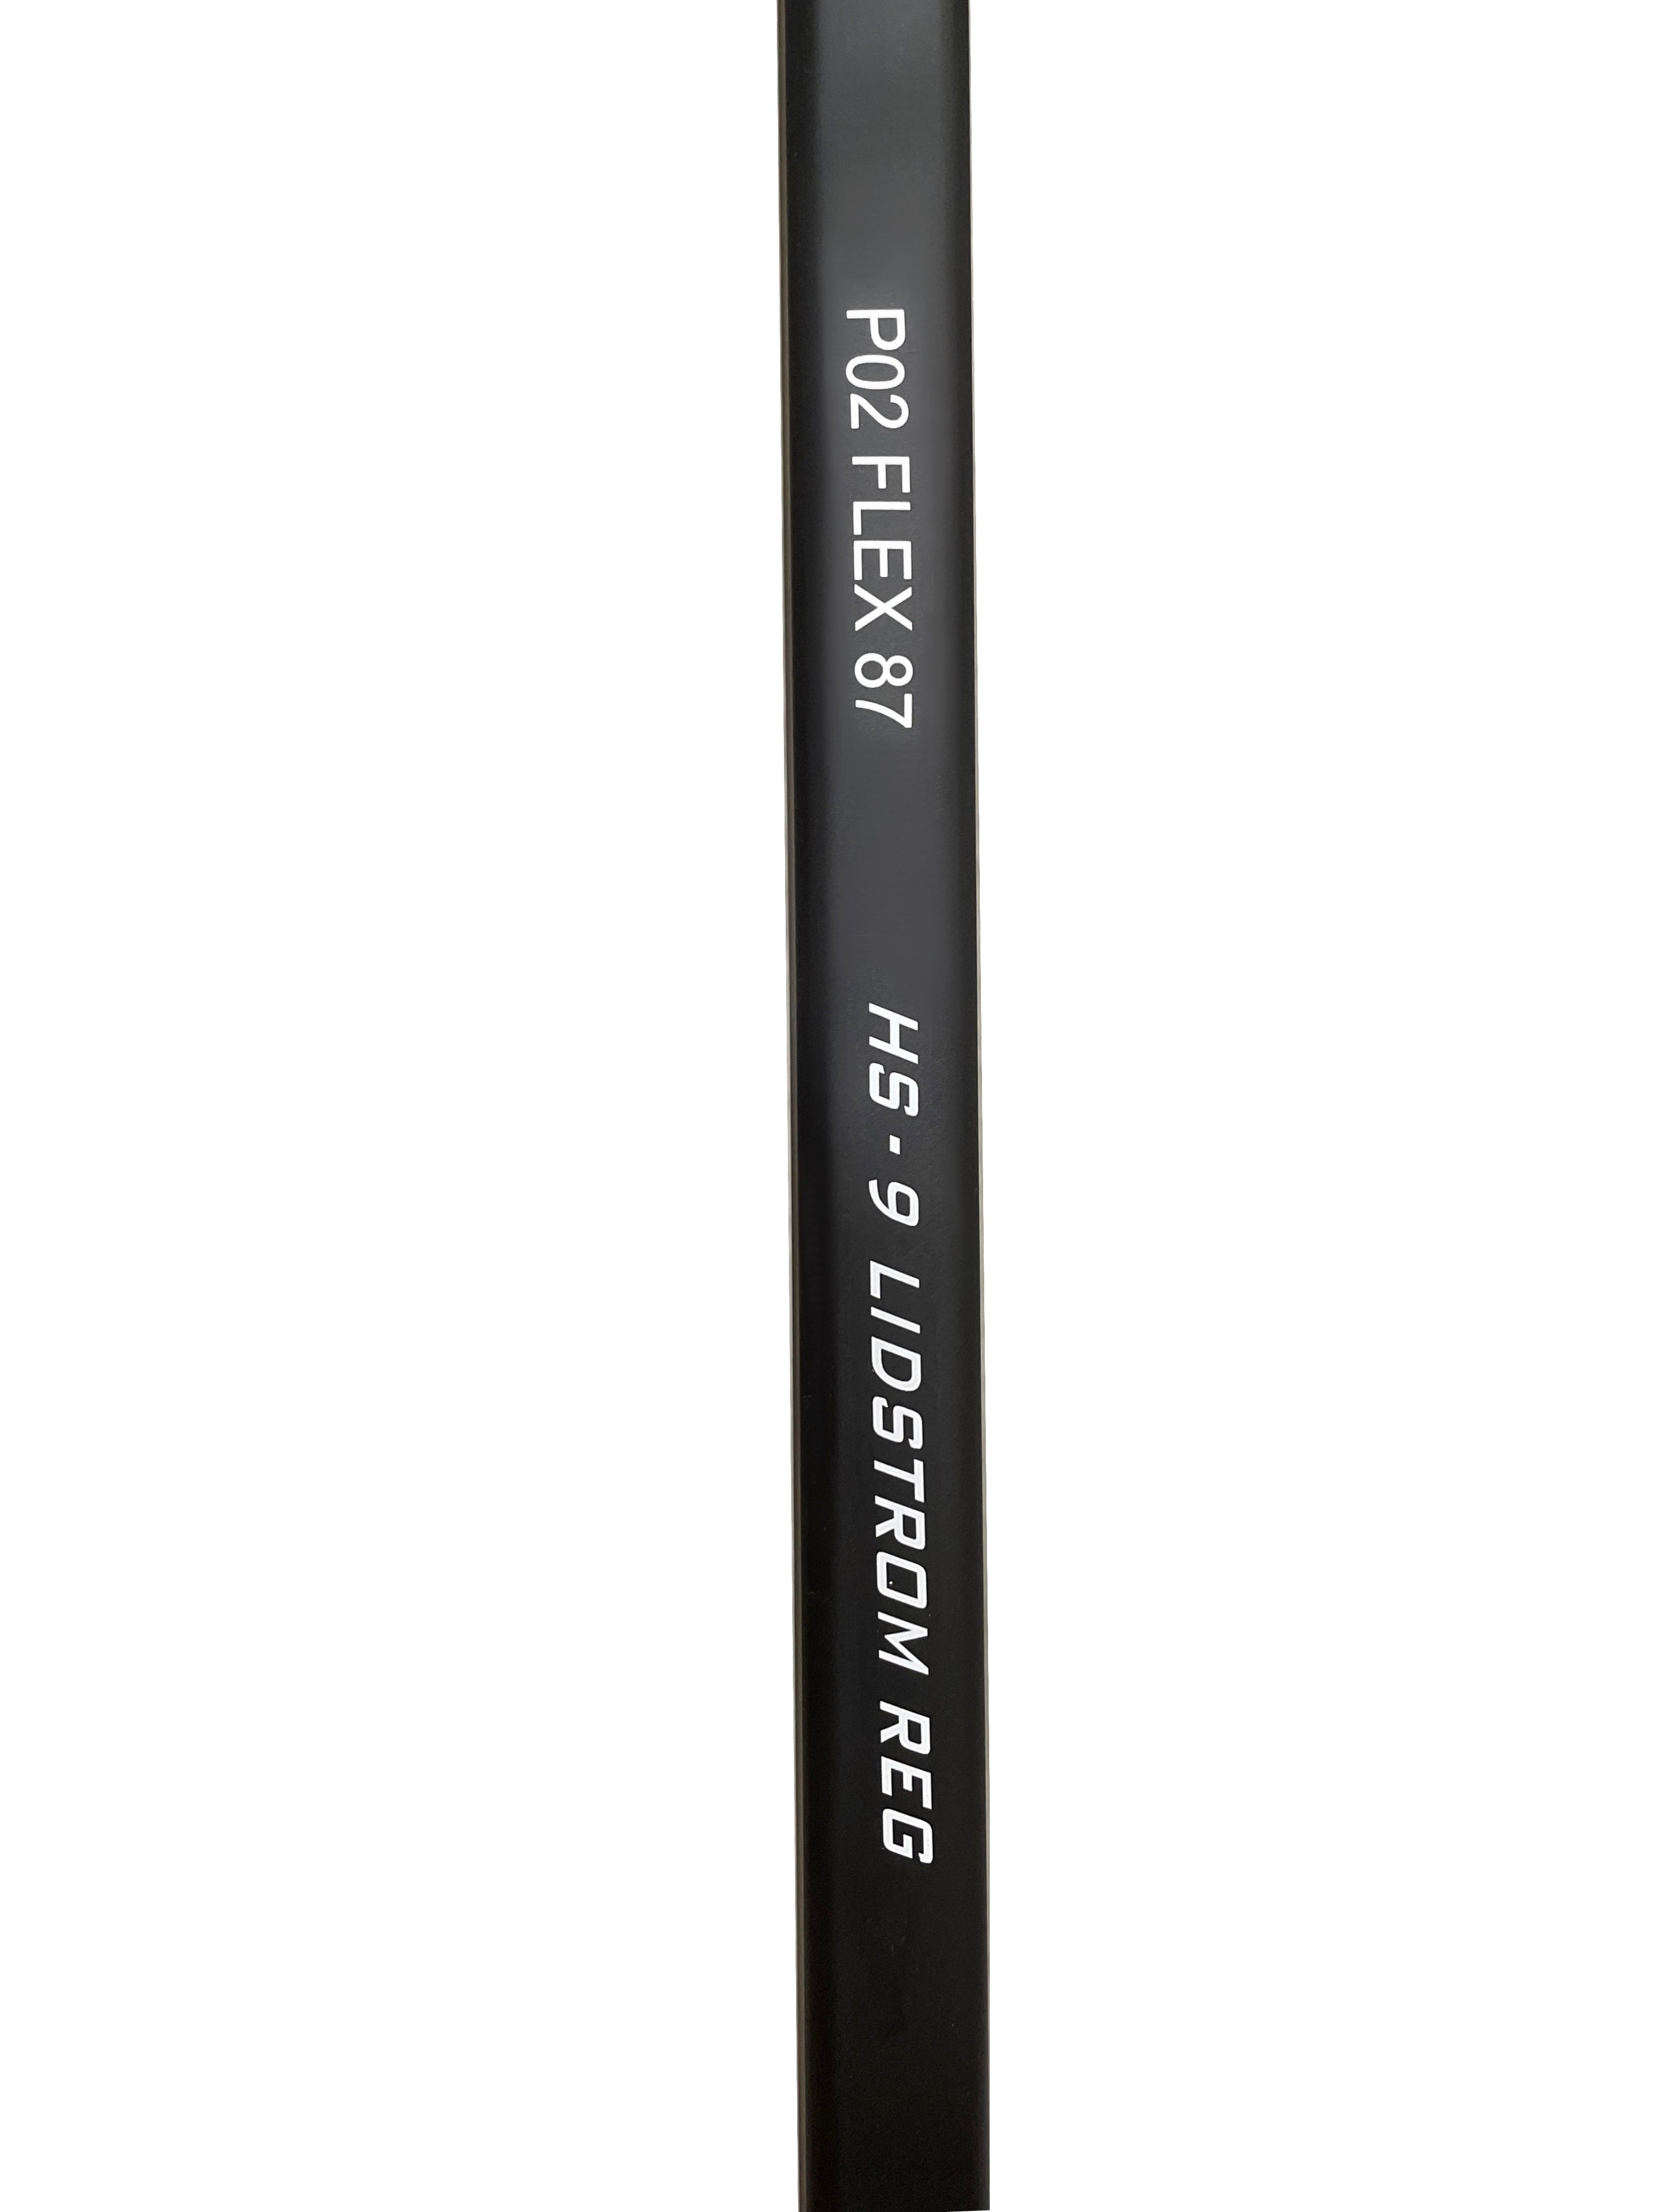 HS-9 High Modulus Carbon Hockey Stick